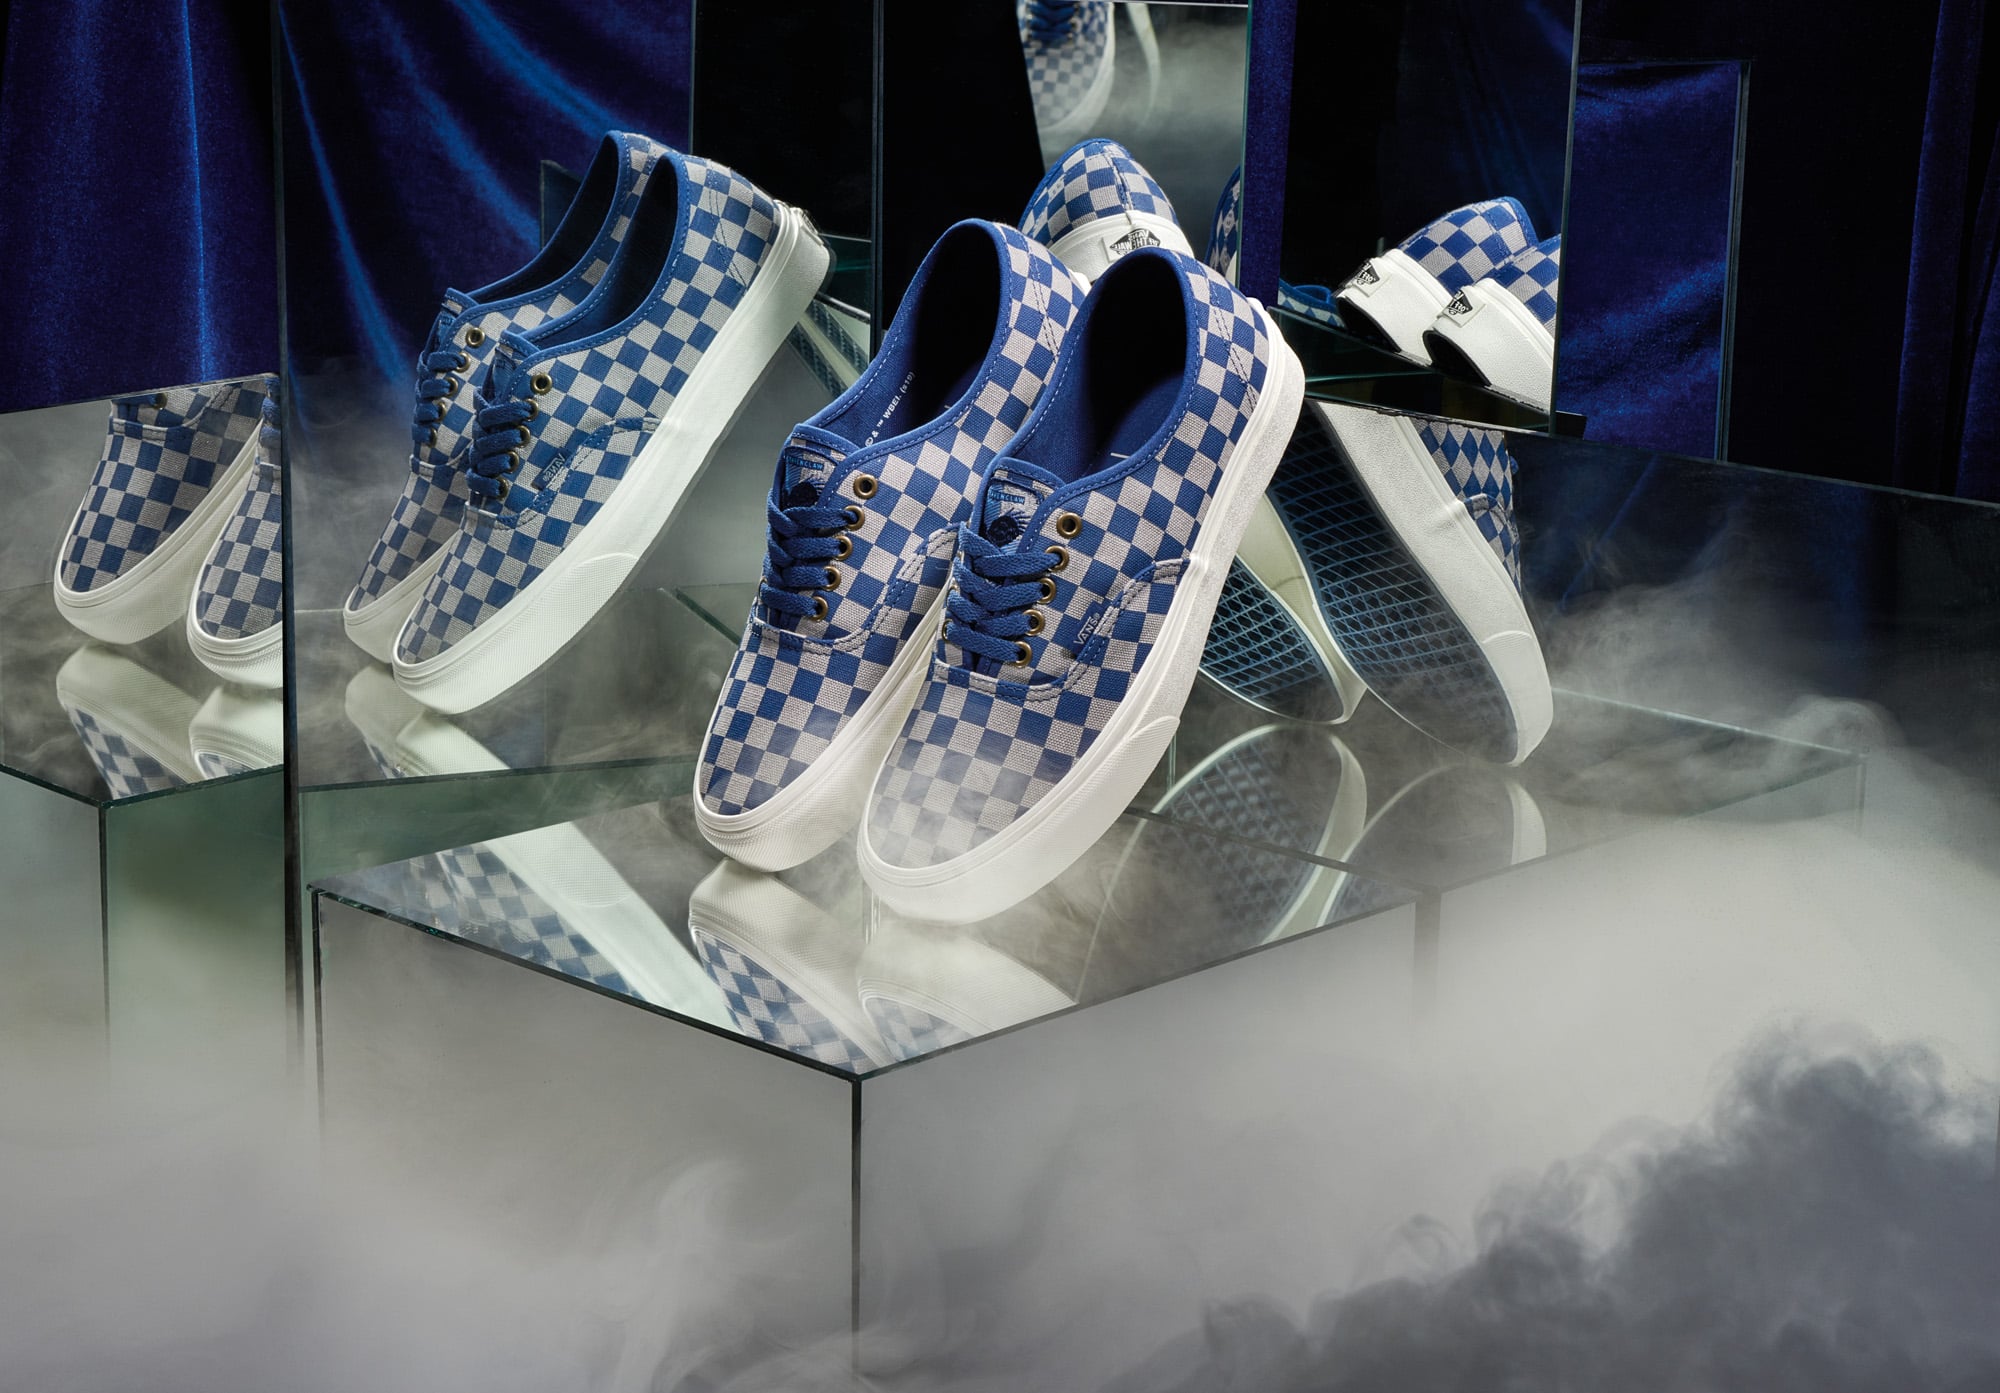 Formulate microphone Correspondent Vans Harry Potter Sneaker Collection 2019 | POPSUGAR Fashion